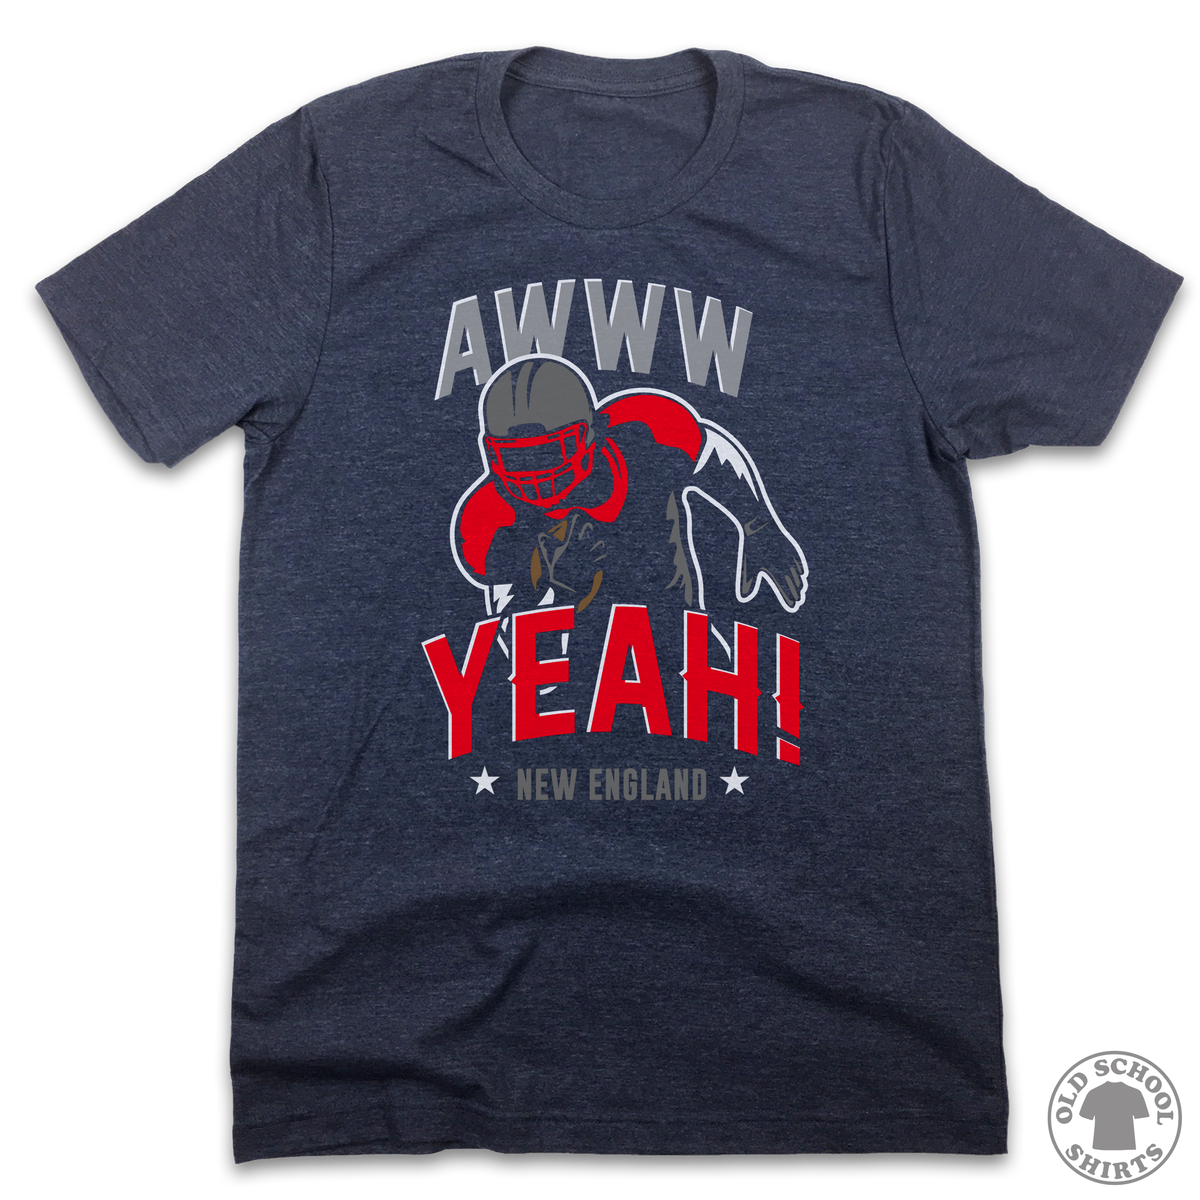 Awww Yeah! - New England Football Tee - Old School Shirts- Retro Sports T Shirts